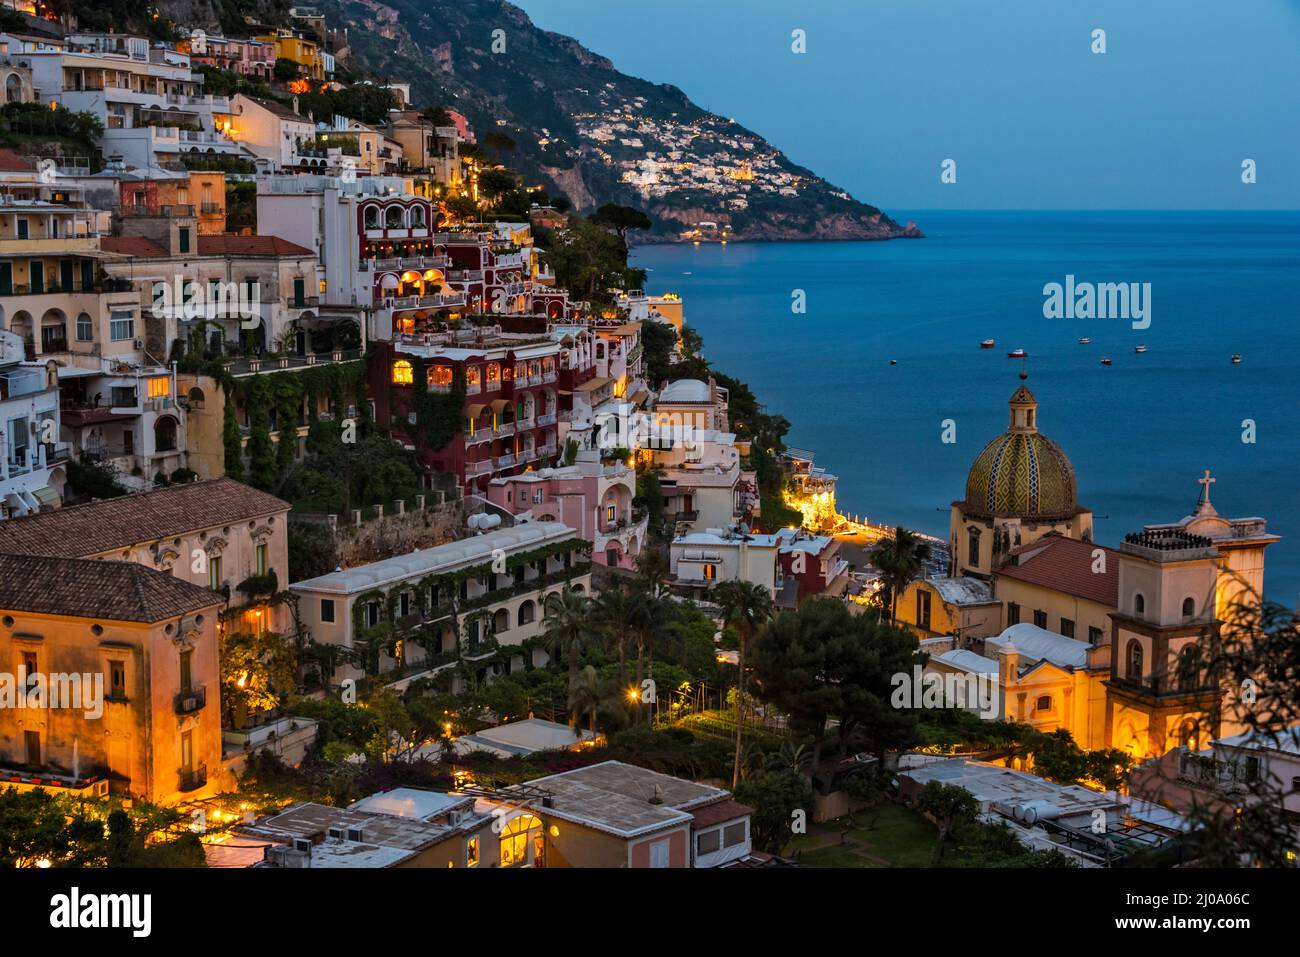 Sunset view of Church of Santa Maria Assunta and houses of Positano along the Amalfi Coast, Salerno Province, Compania Region, Italy Stock Photo